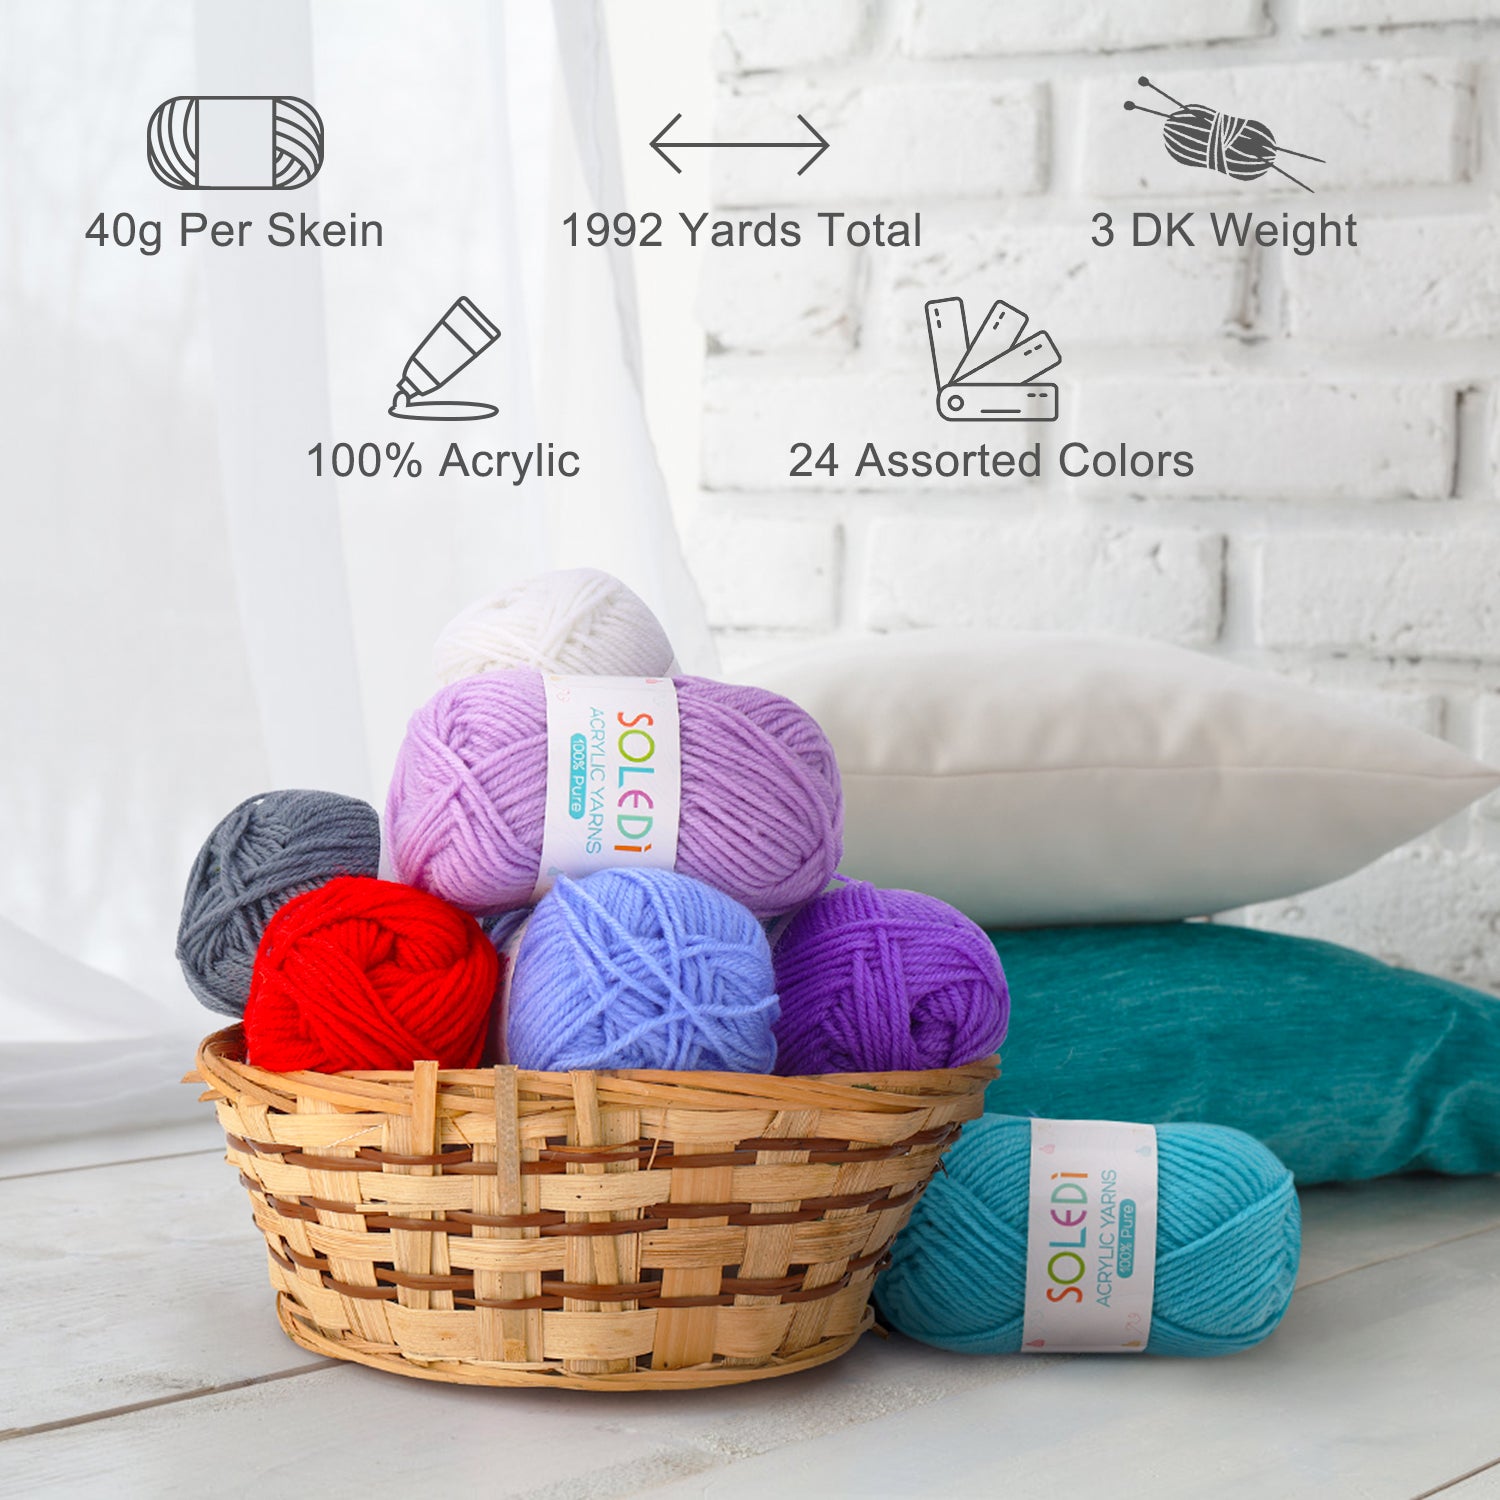 SOLEDI Wool For Crocheting Acrylic Crochet Wool (24 colors/40g)